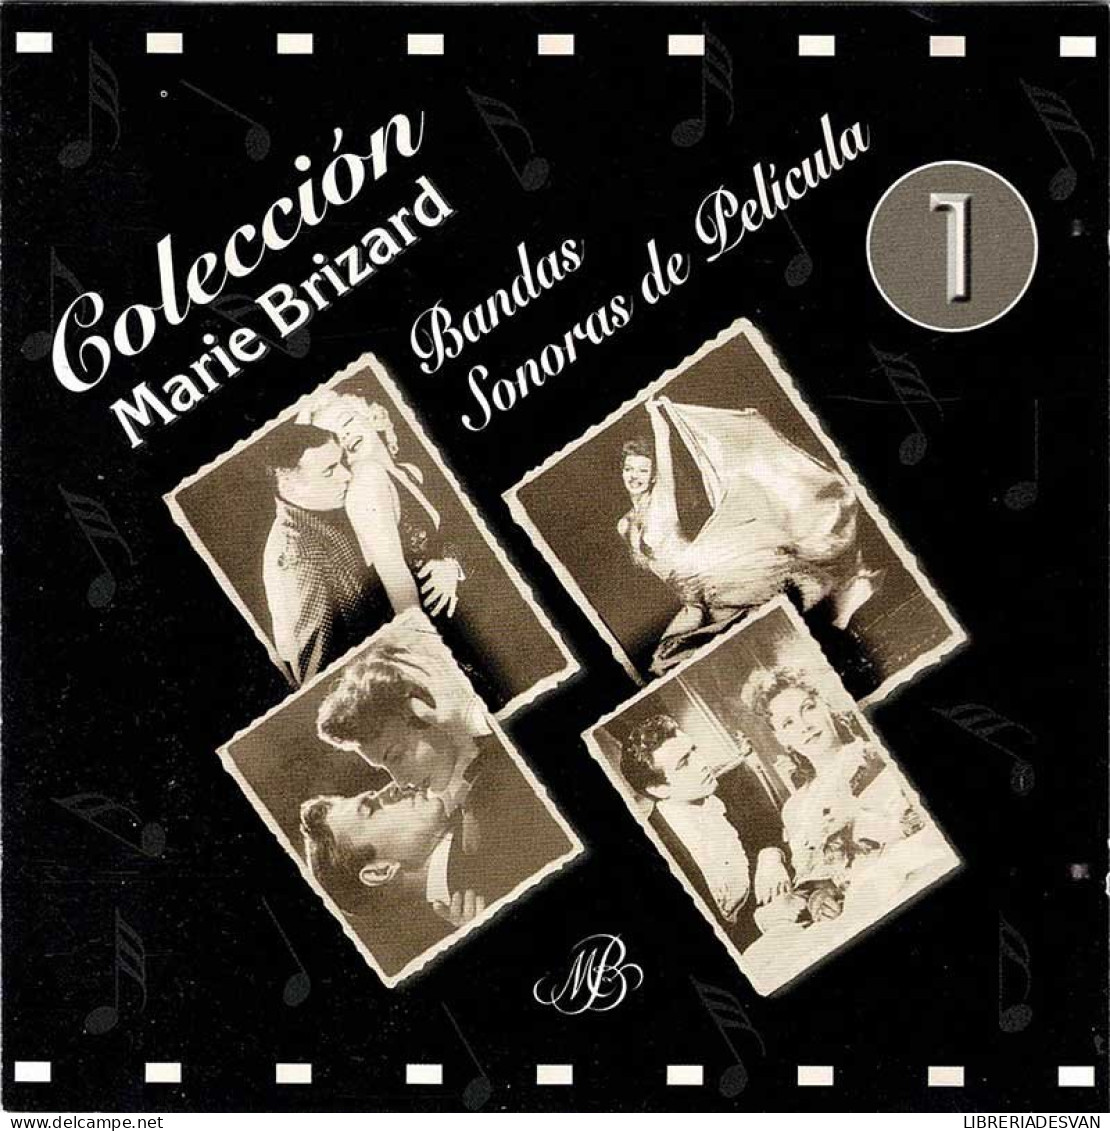 Colección Marie Brizard. Bandas Sonoras De Película Vol. 1. CD - Música De Peliculas